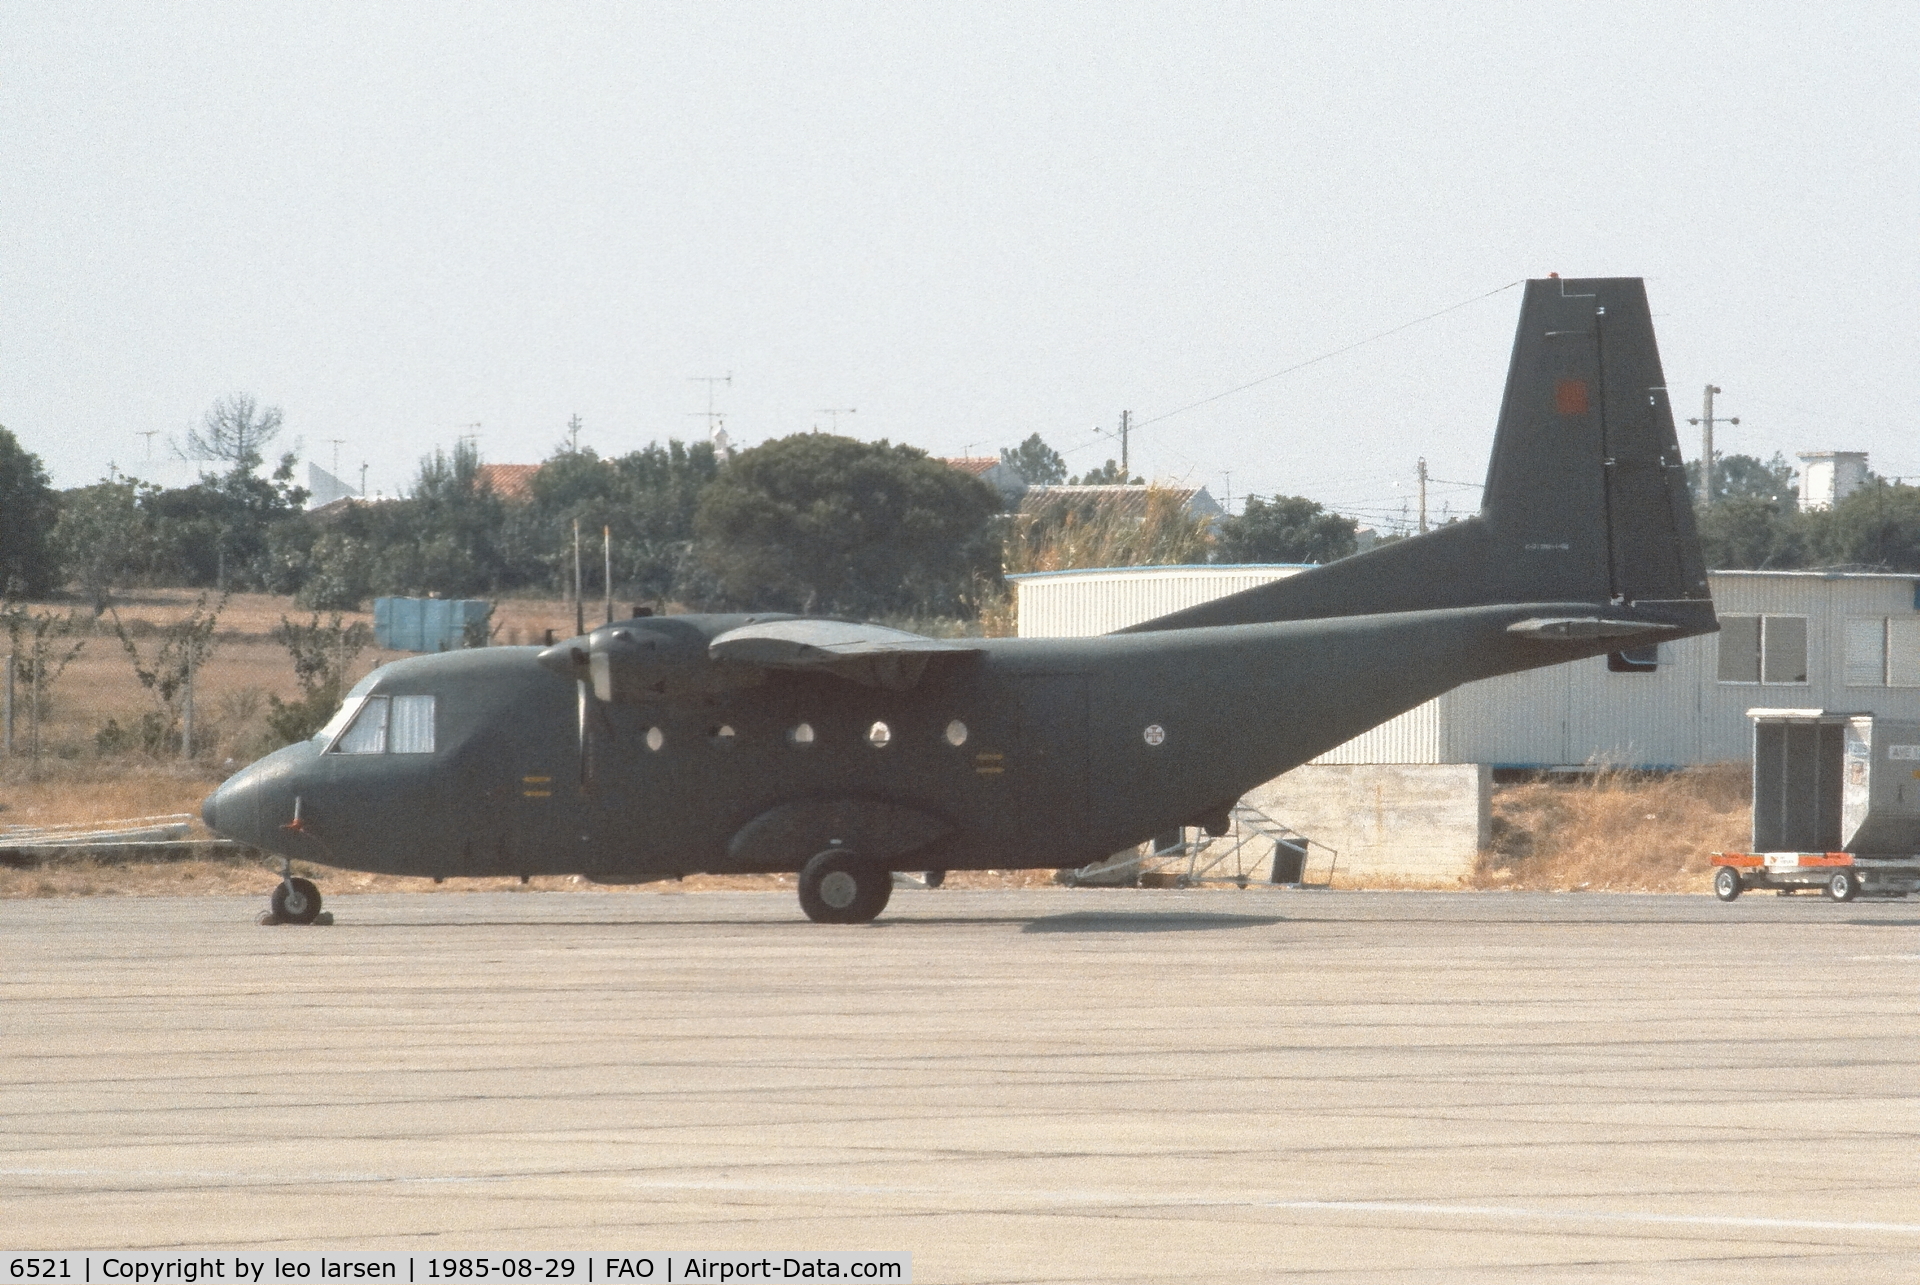 6521, 1976 CASA 212-100 Aviocar C/N 56, Faro 29.8.1985